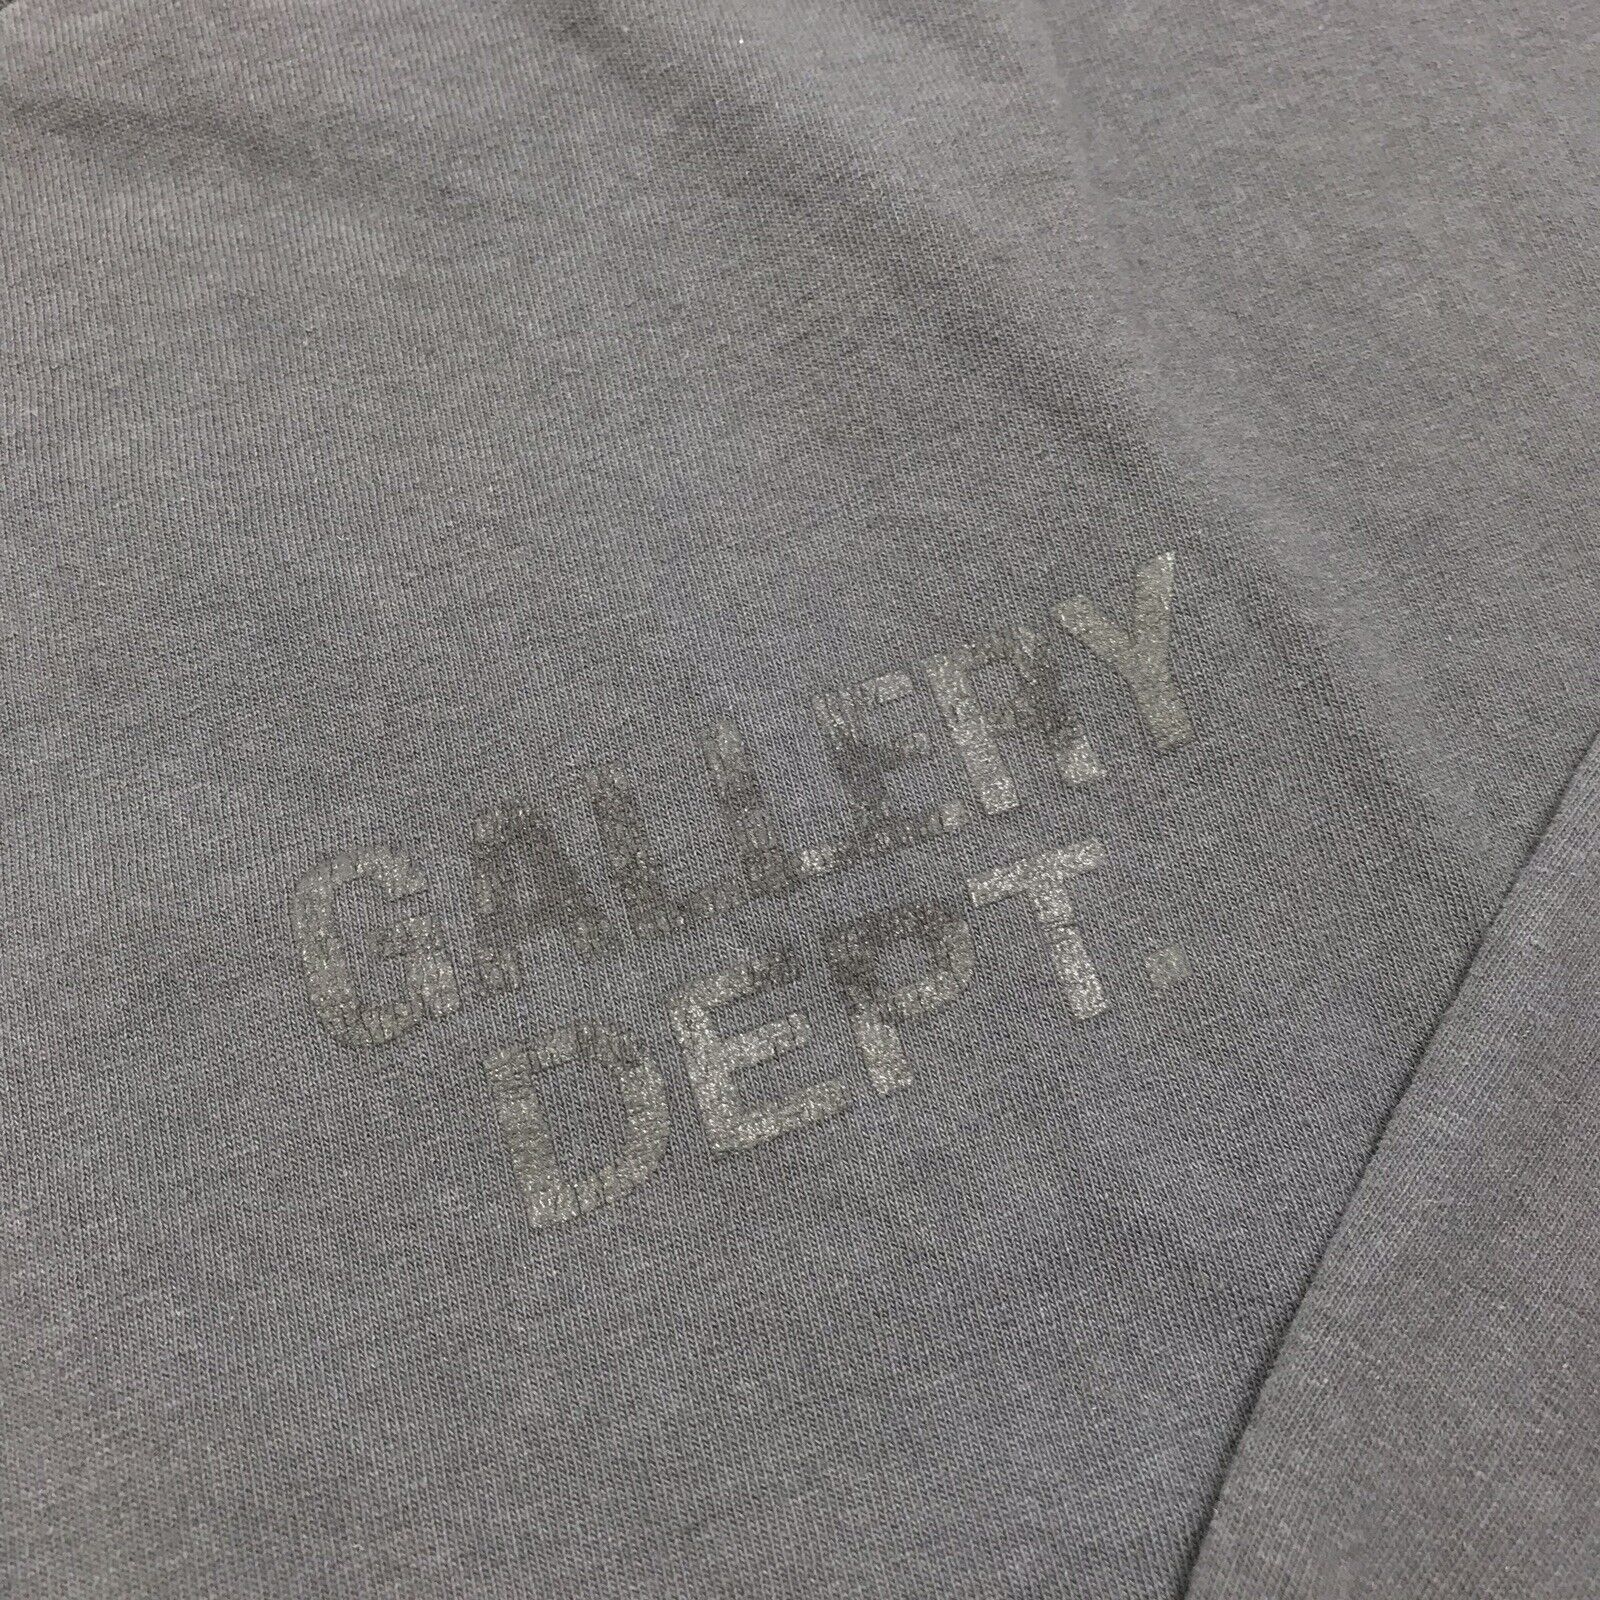 GALLERY DEPT. SECURITY PRINT BLACK LONG SLEEVE T-SHIRT